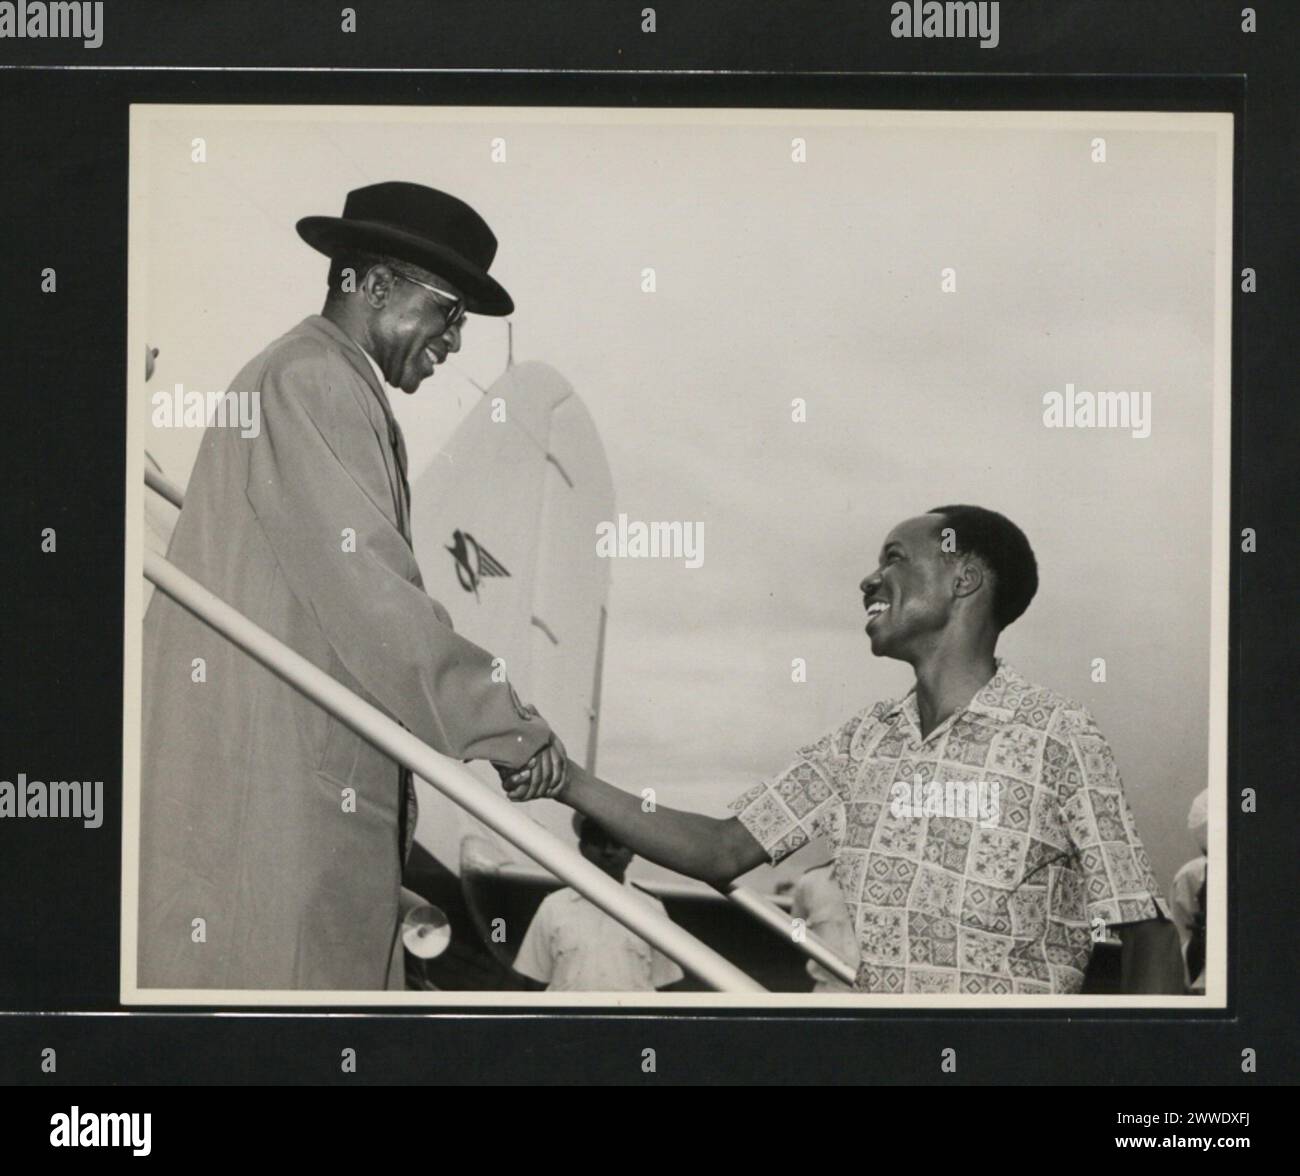 Description: Hastings Banda (left) and Julius Nyerere Location: Tanganyika juliusnyerere, hastingsbanda, africa Stock Photo